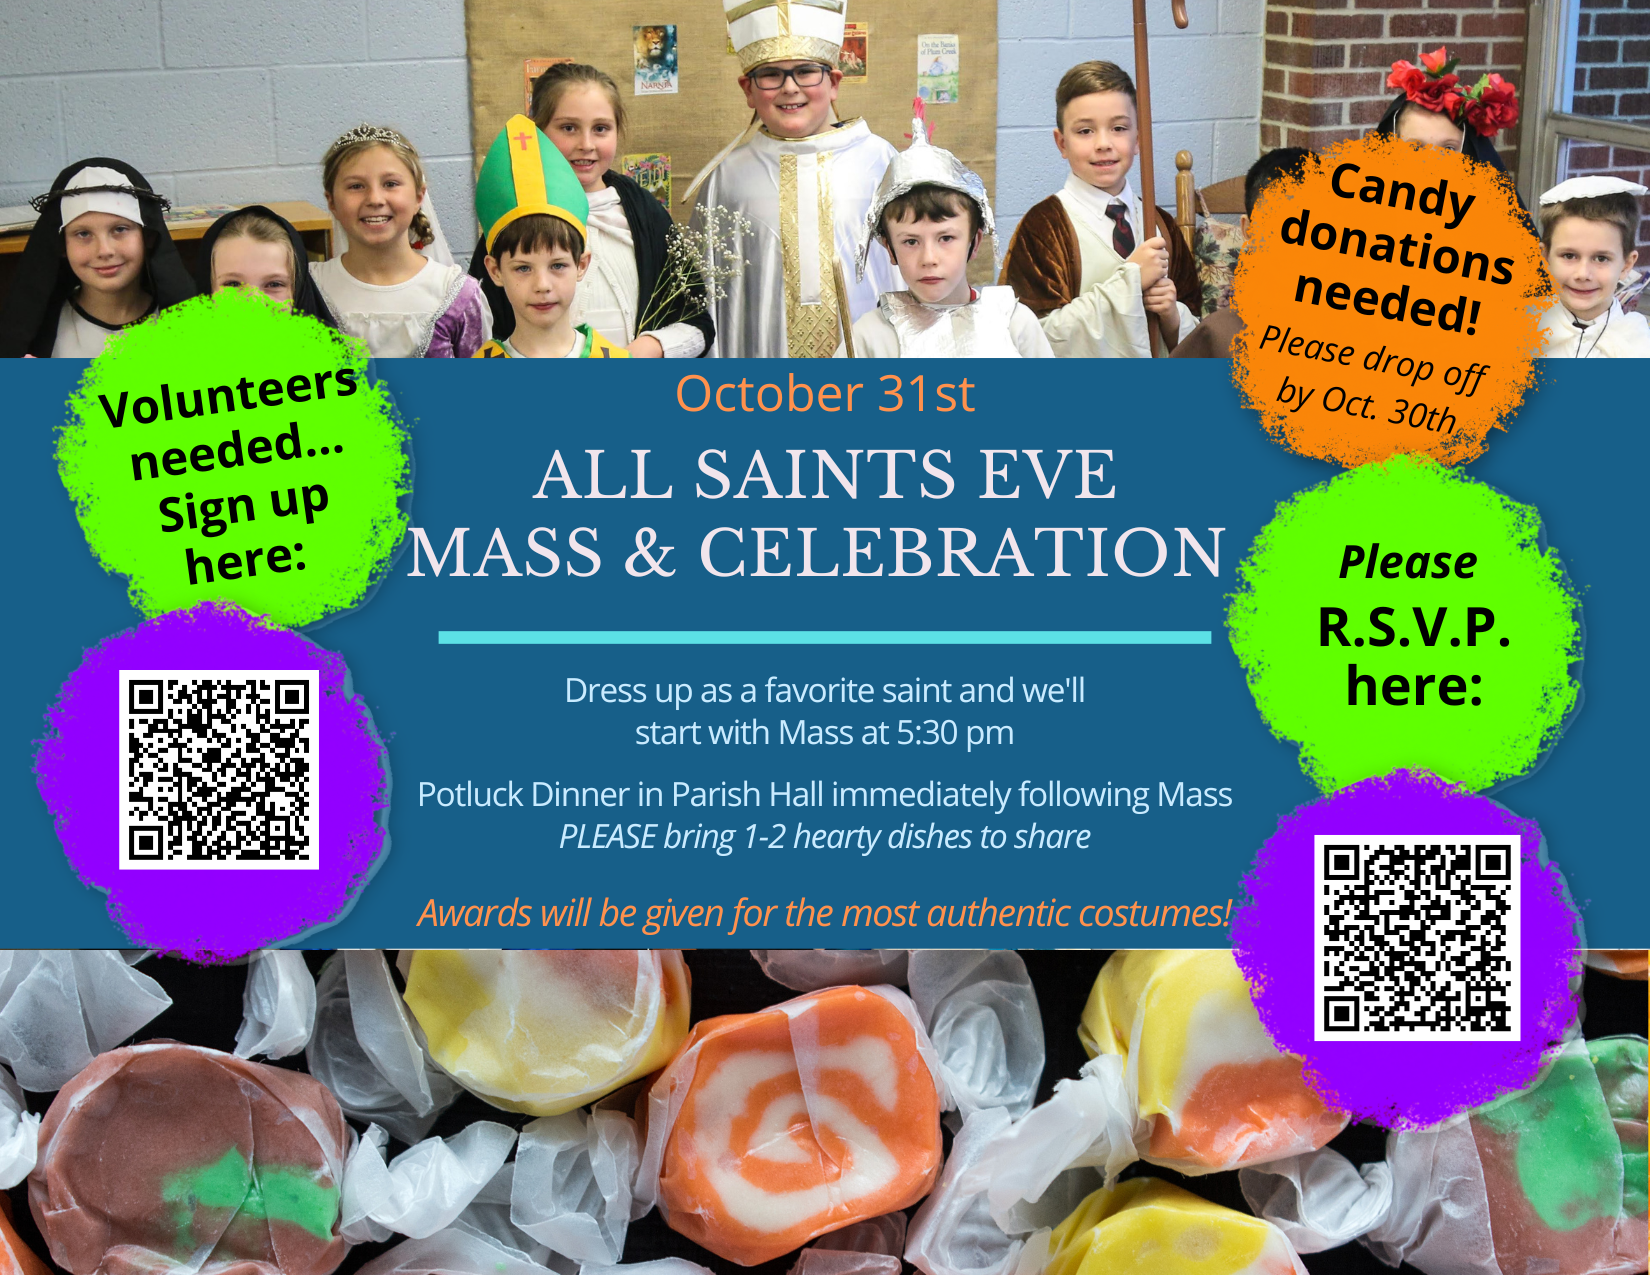 All Saints’ Eve Mass & Celebration – Oct. 31 (Tues.)